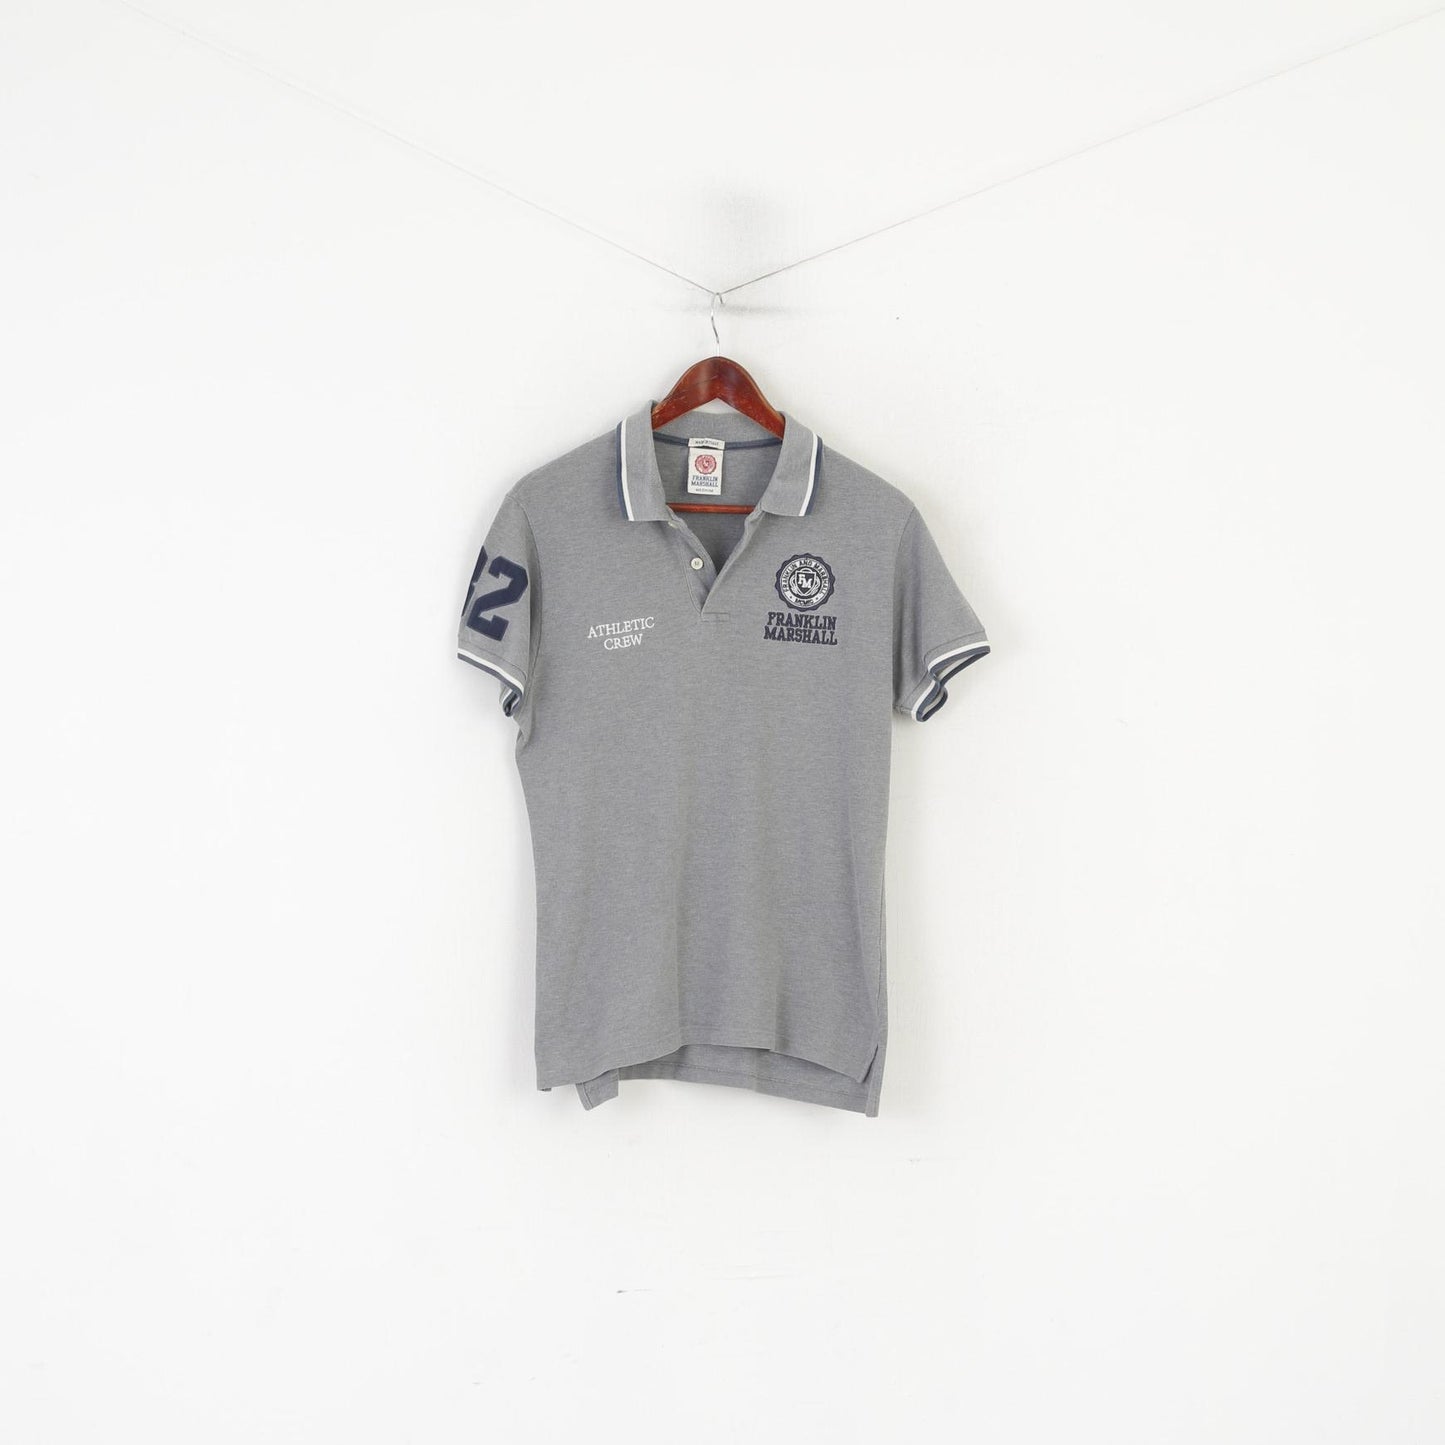 Franklin Marshall Men M Polo Shirt Grey Cotton Athletic Crew #82 Slim Fit Top